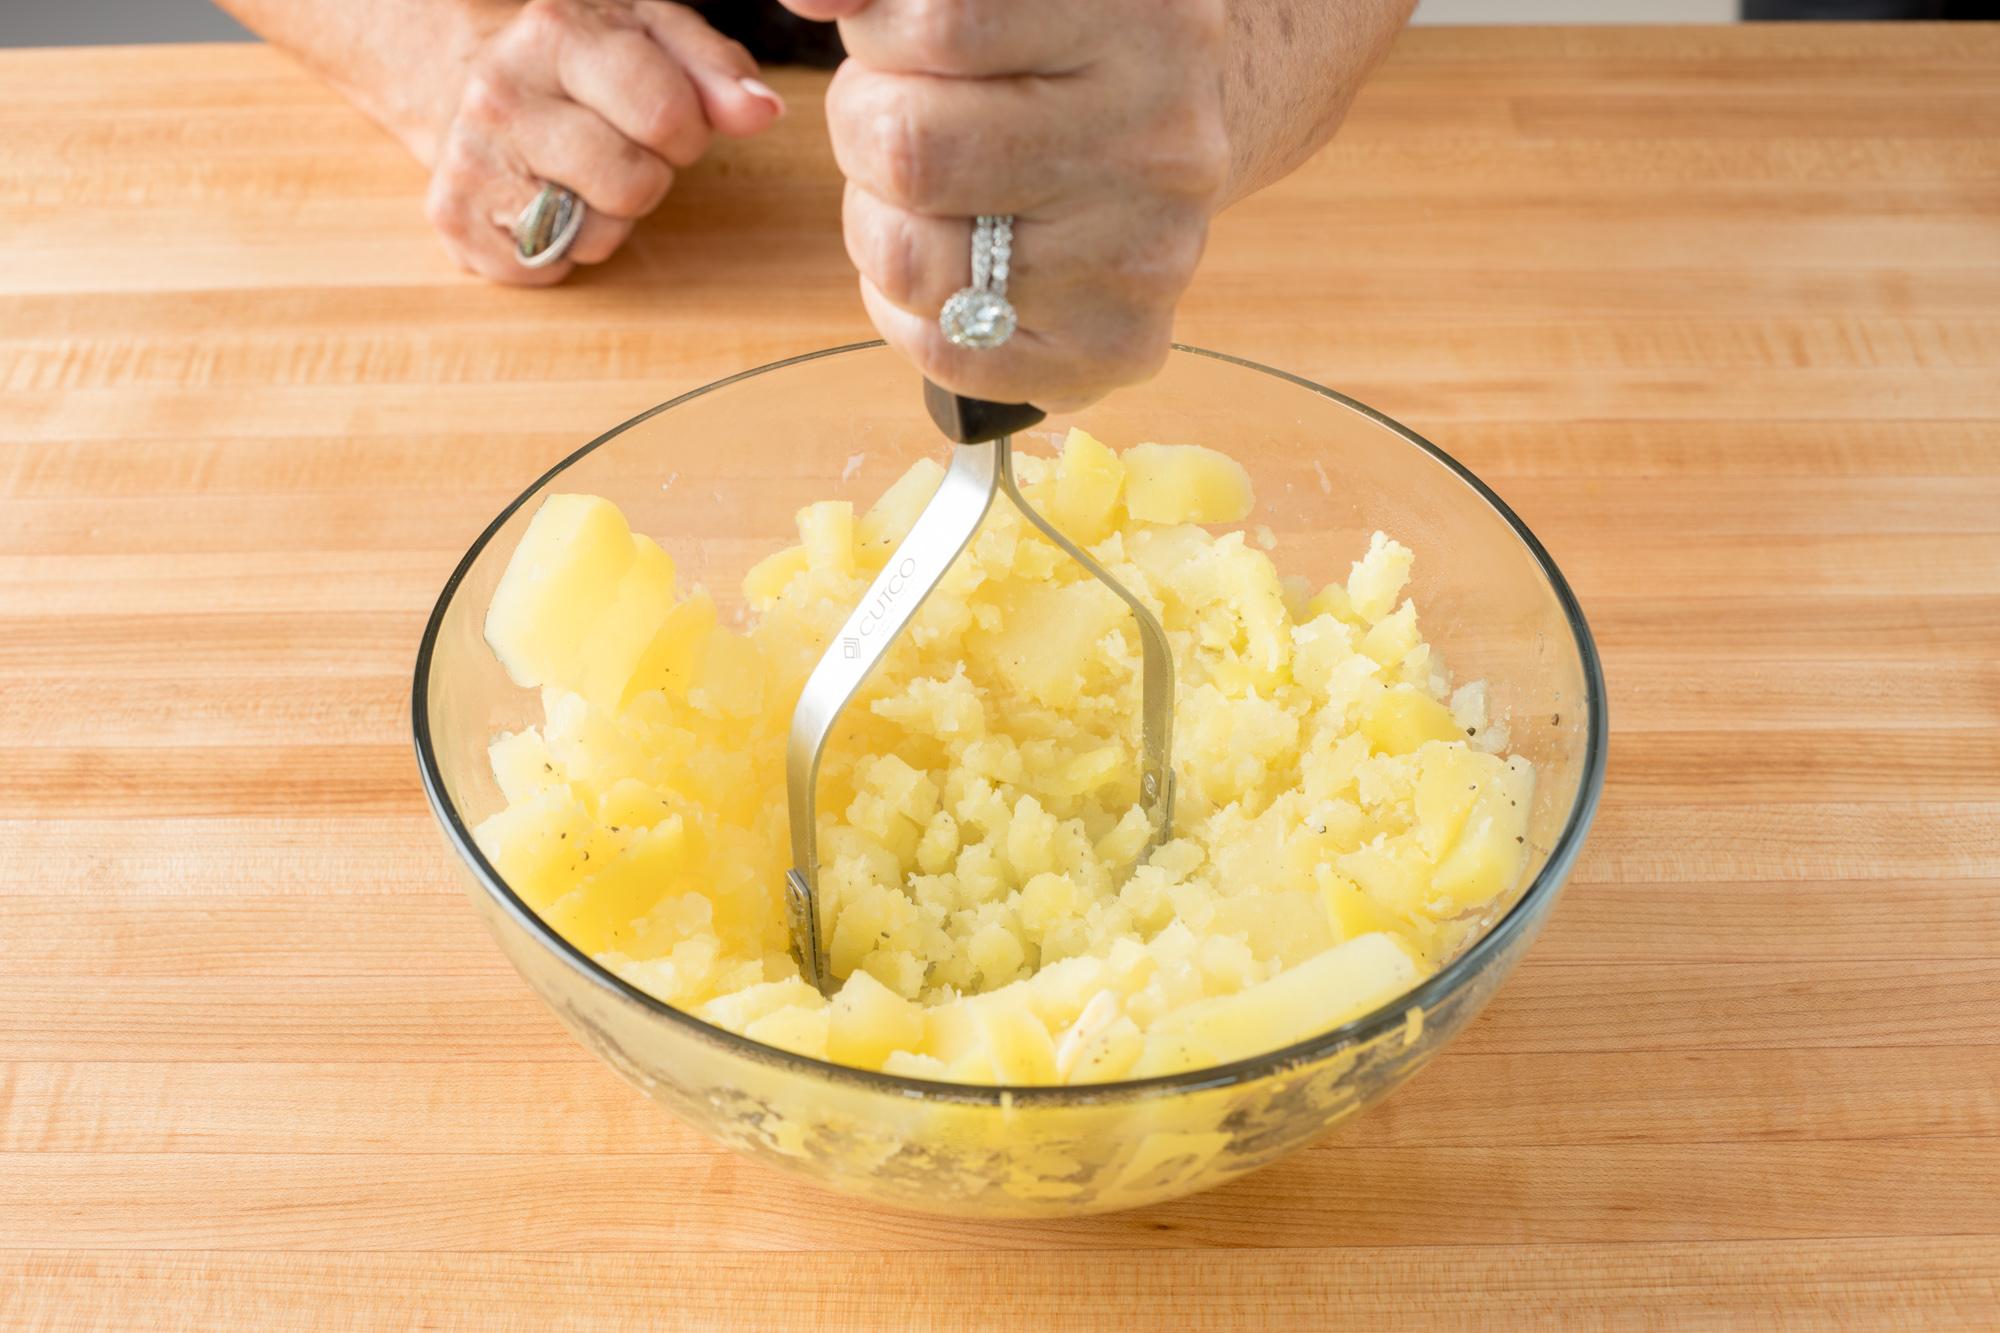 https://images.cutco.com/learn/2019/garlic-mashed-potatoes-4-l.jpg